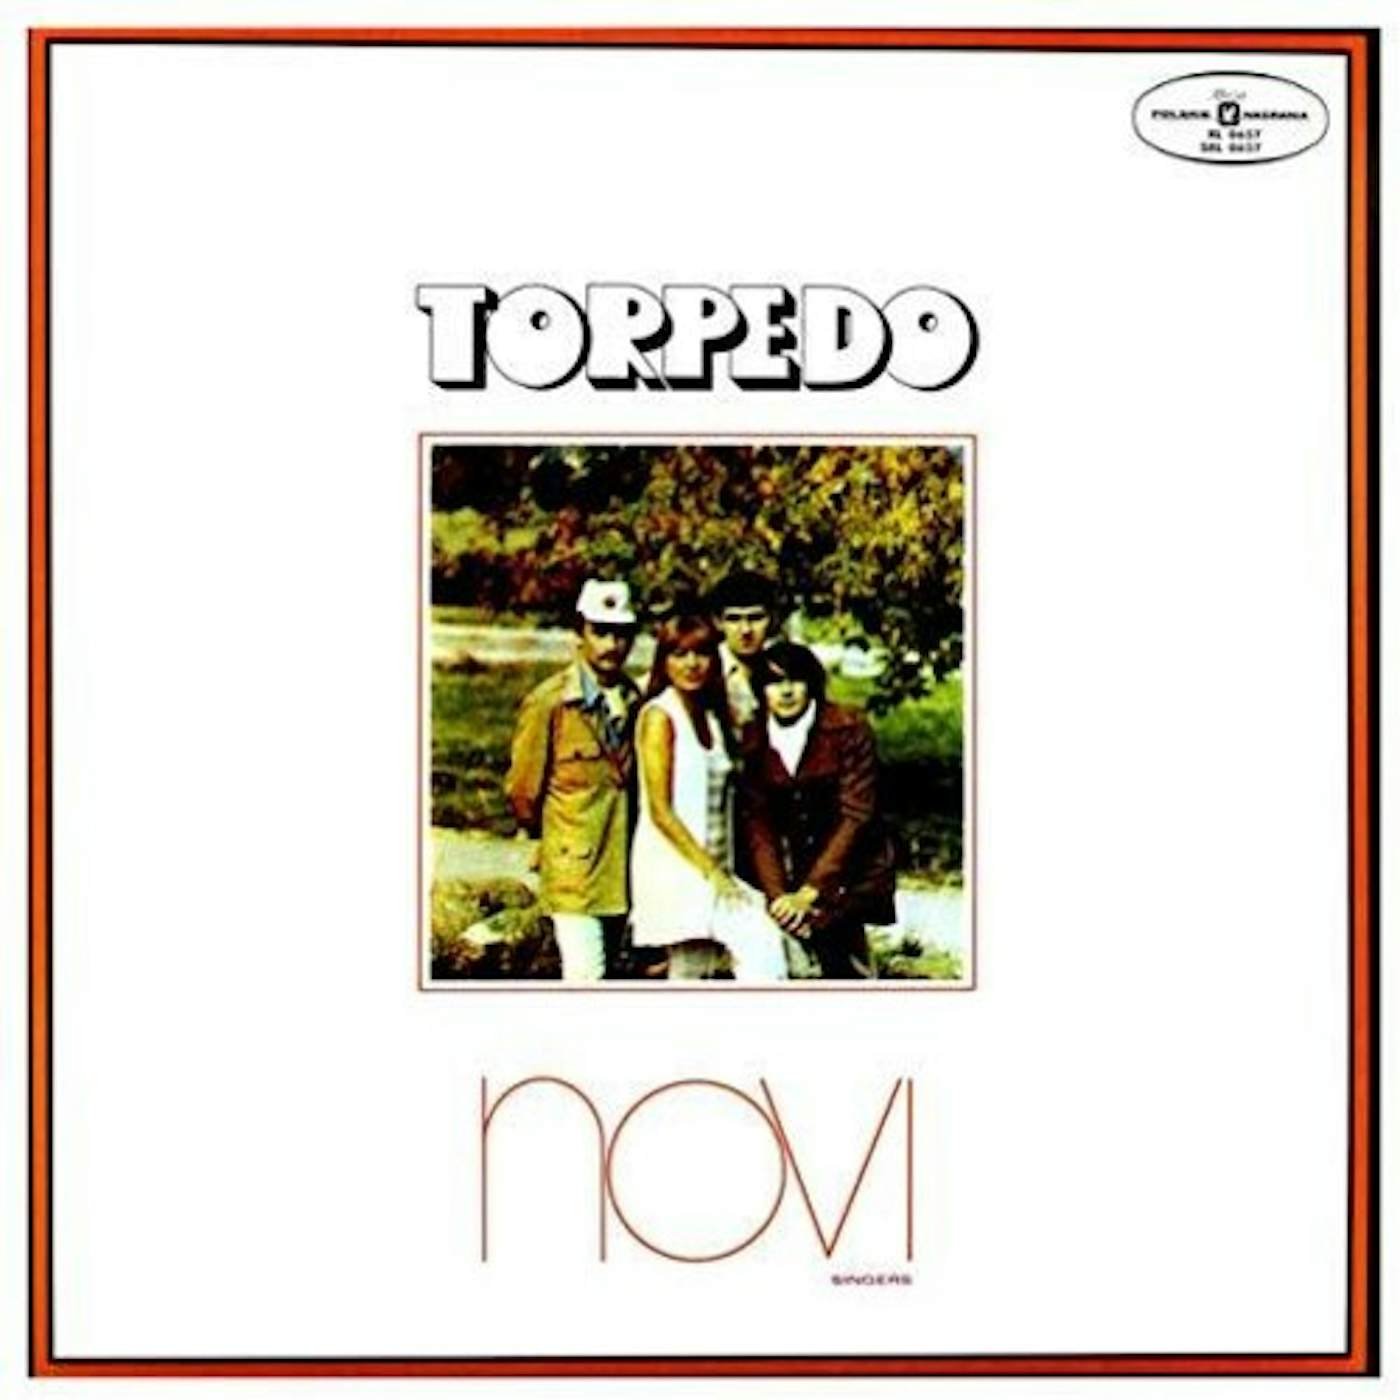 Novi Singers Torpedo Vinyl Record